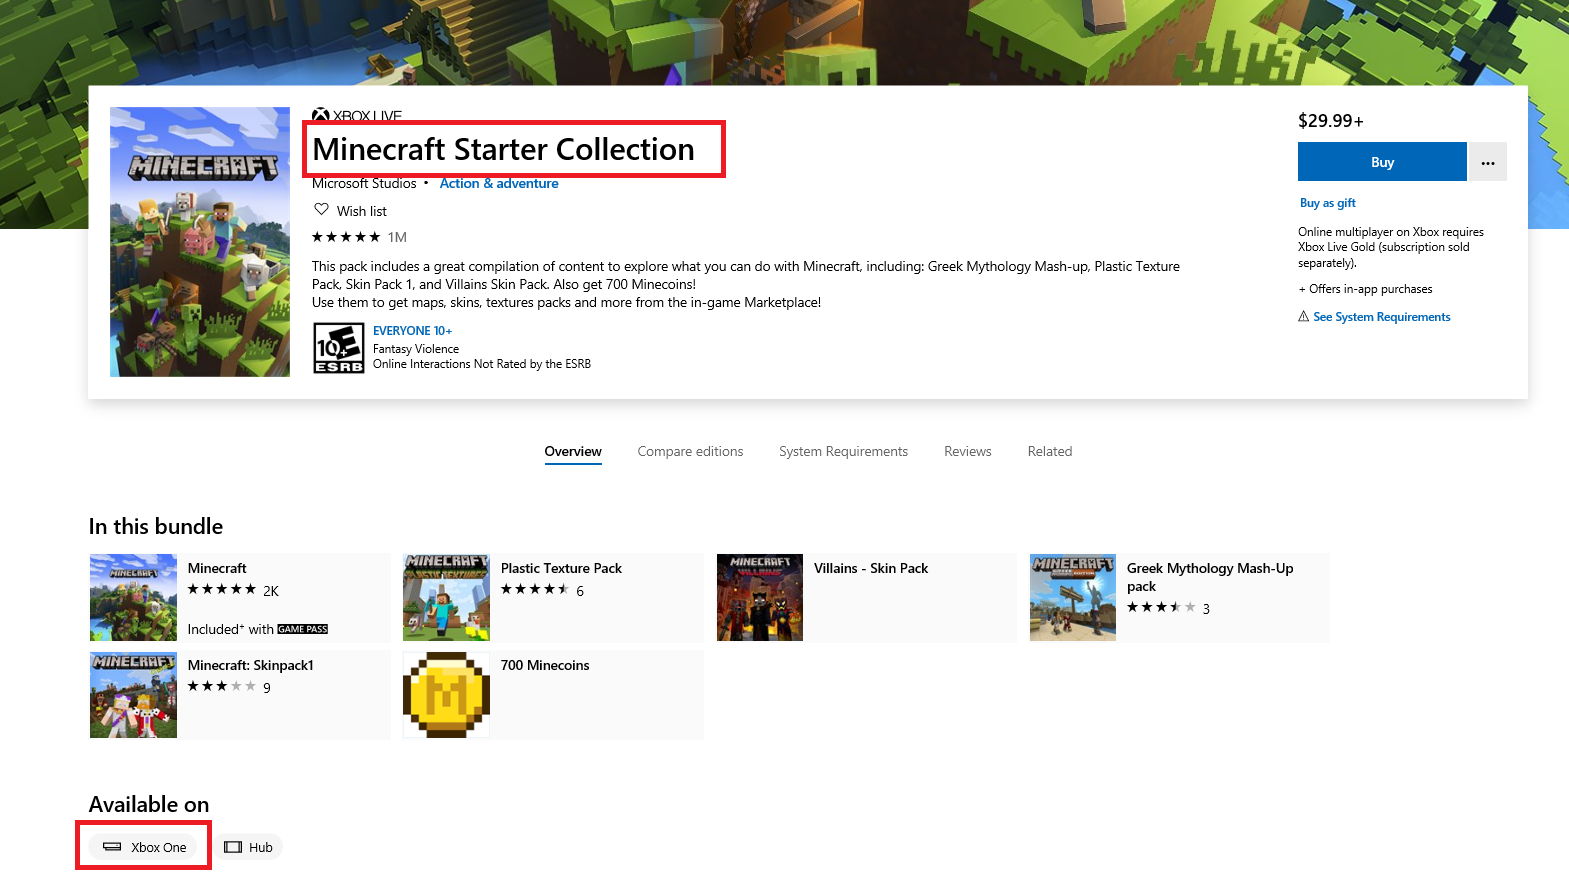 Installing Minecraft Starter Collection 862d3756-fb82-4174-b532-f47bed2d4c72?upload=true.png